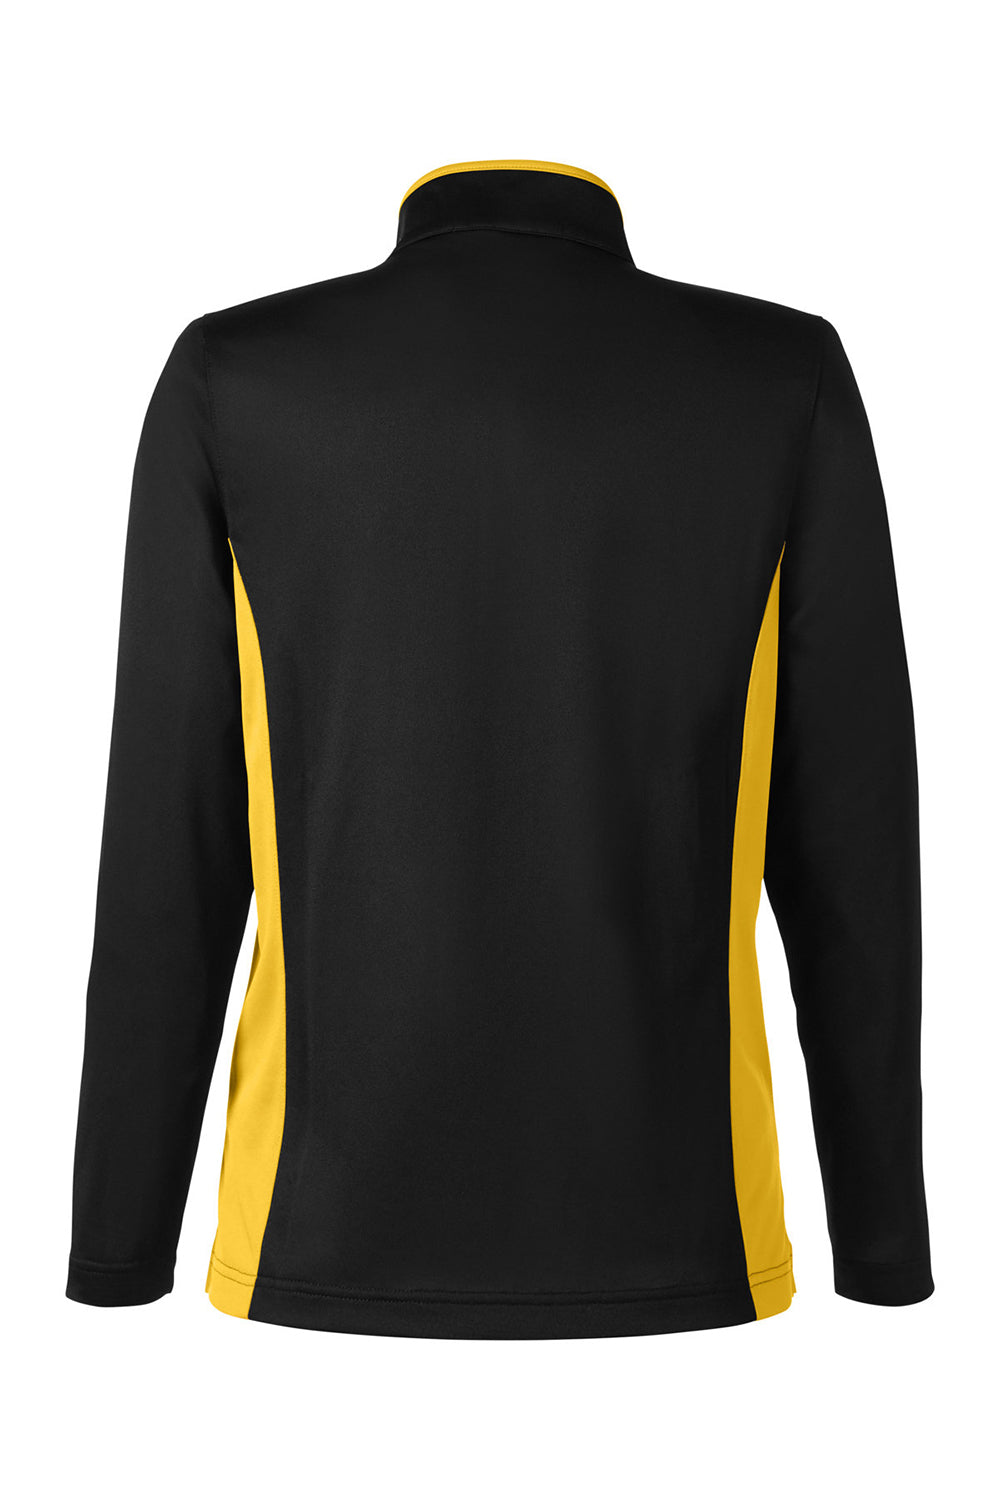 Harriton M786W Womens Flash Performance Moisture Wicking Colorblock 1/4 Zip Sweatshirt Black/Sunray Yellow Flat Back